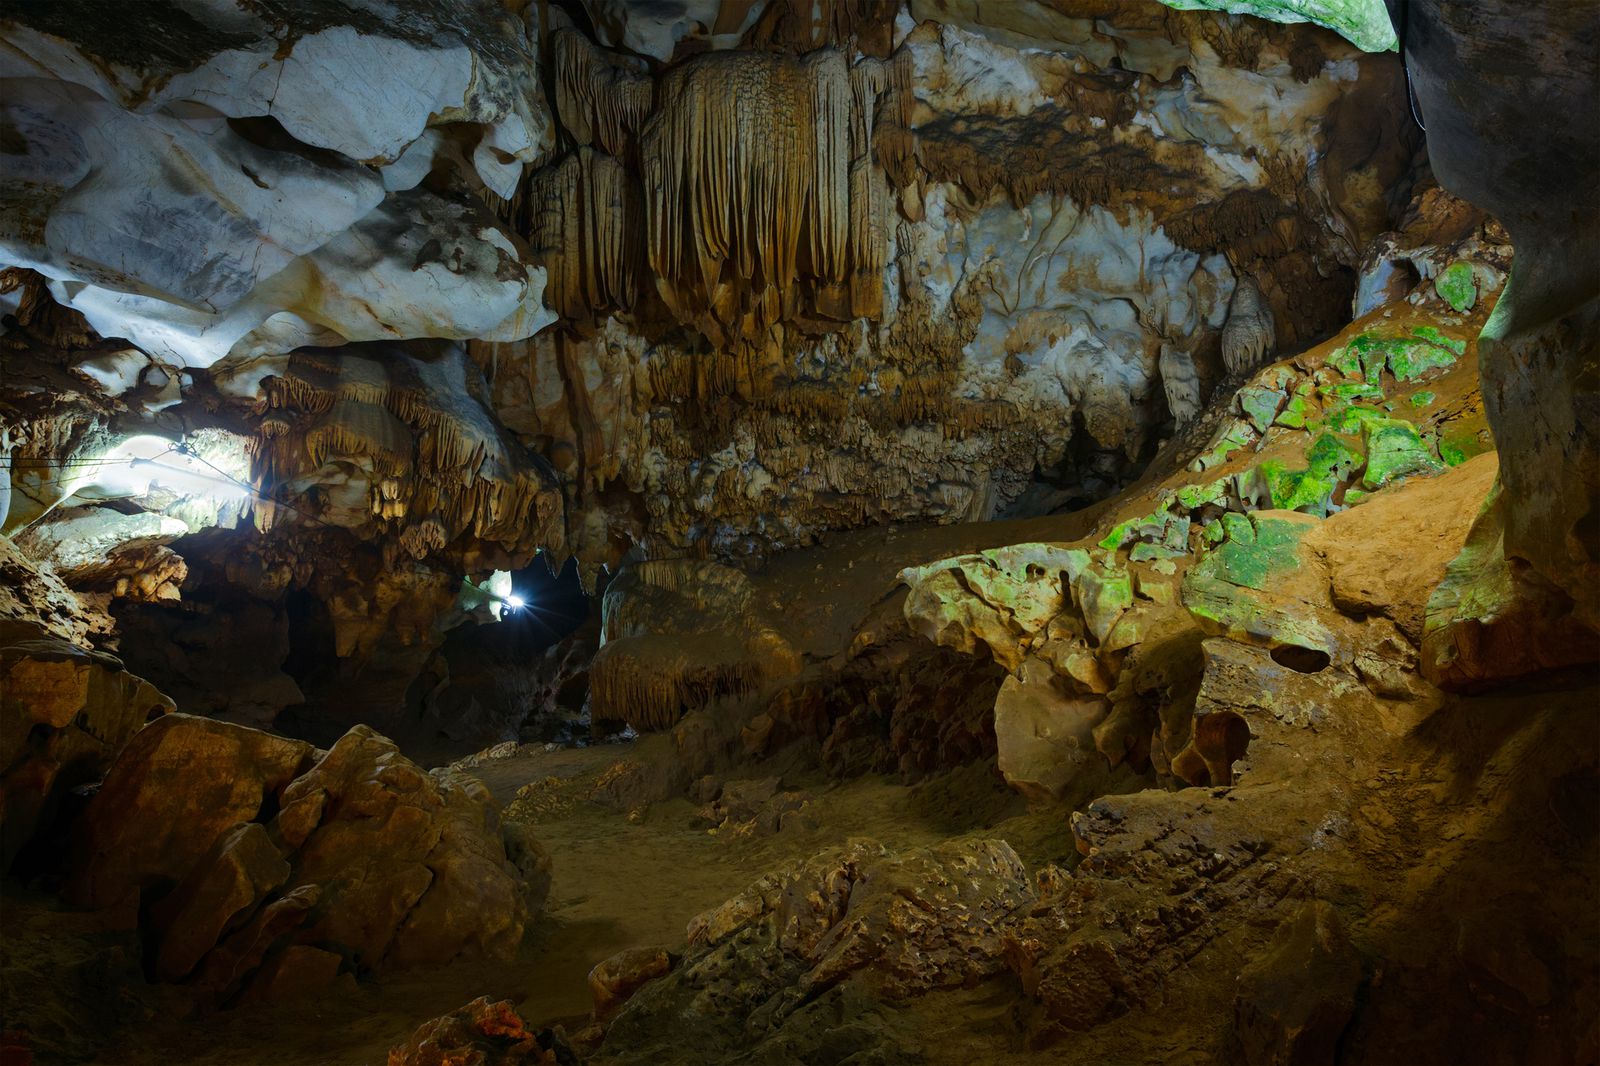 2196m 地球上で最も深い洞窟 クルベラ洞窟 の探検が過酷すぎる Retrip リトリップ